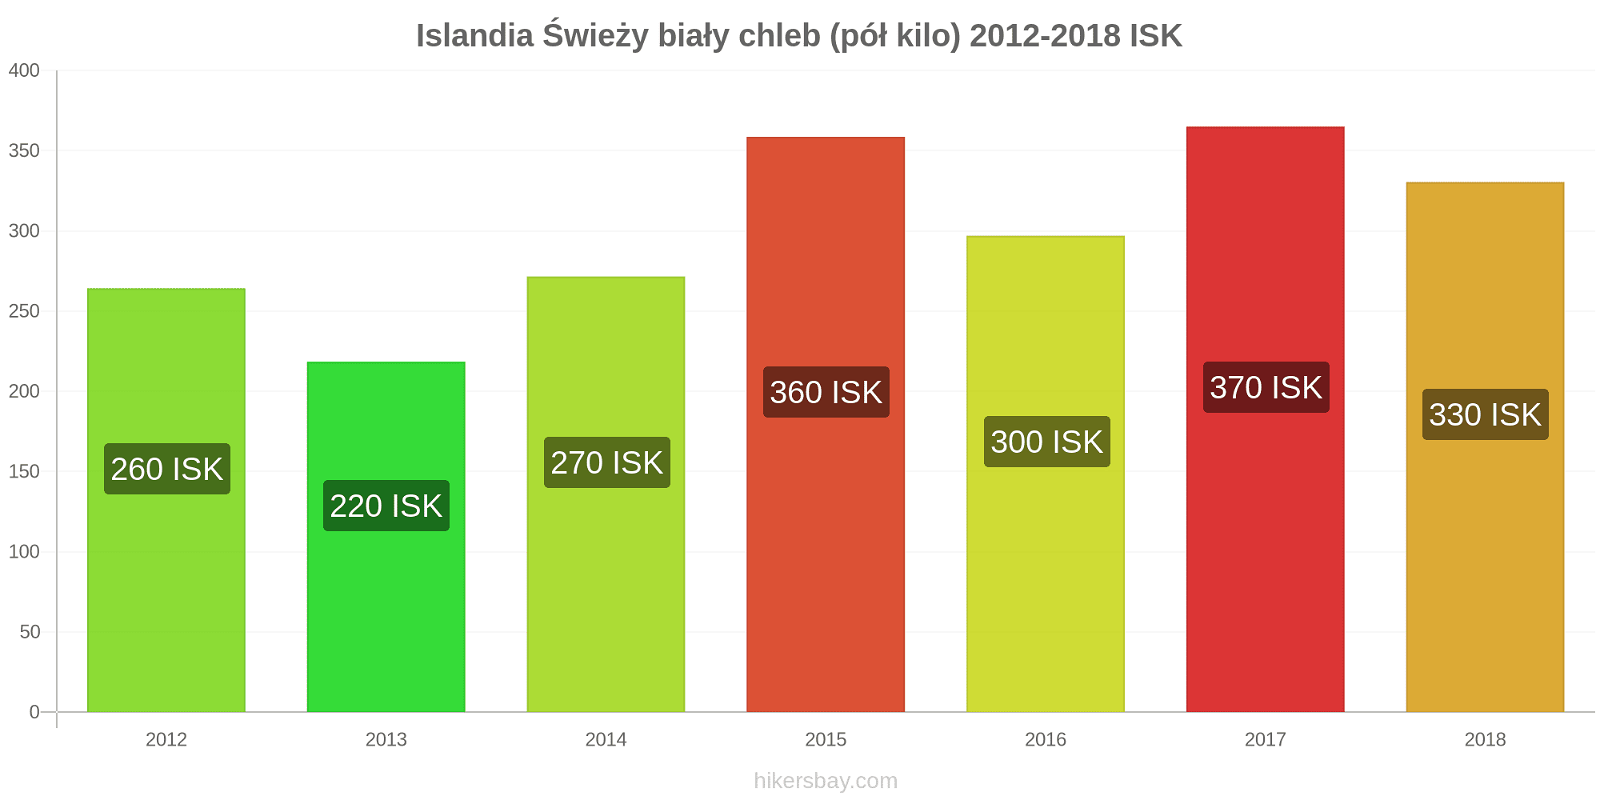 Islandia zmiany cen Chleb pół kilo hikersbay.com